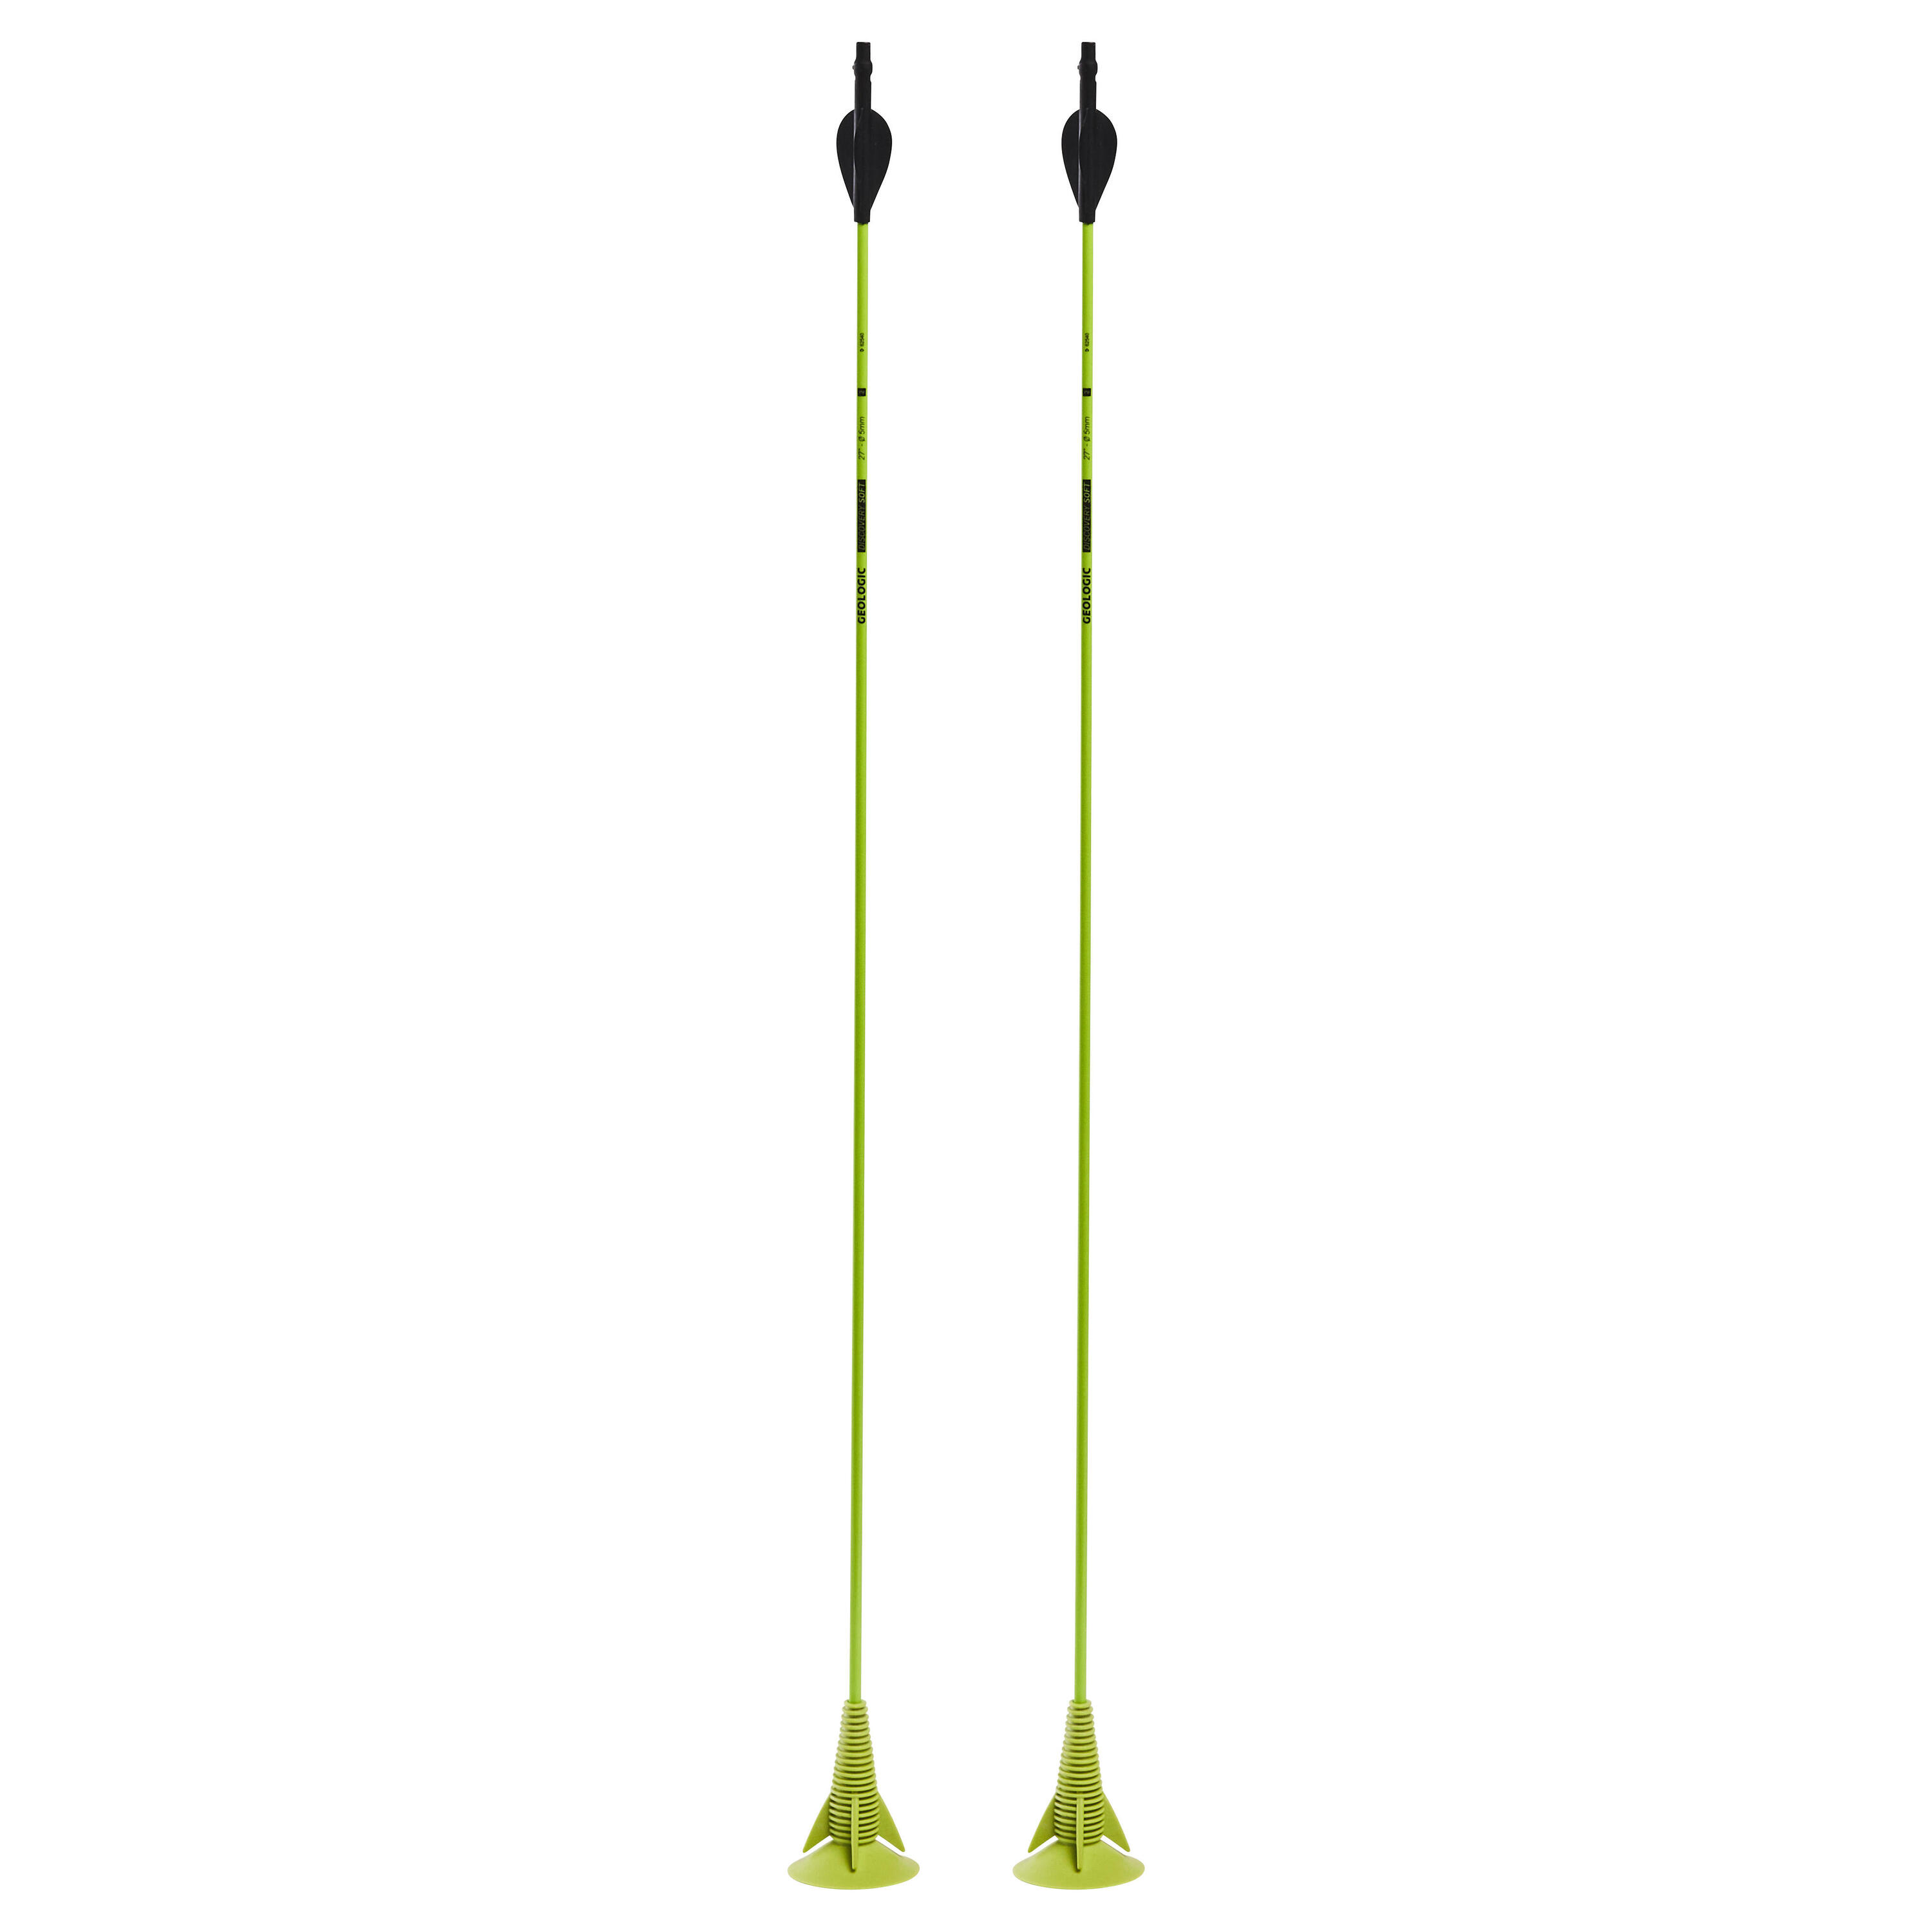 Discosoft Archery Arrows Twin-Pack - Green 17/21